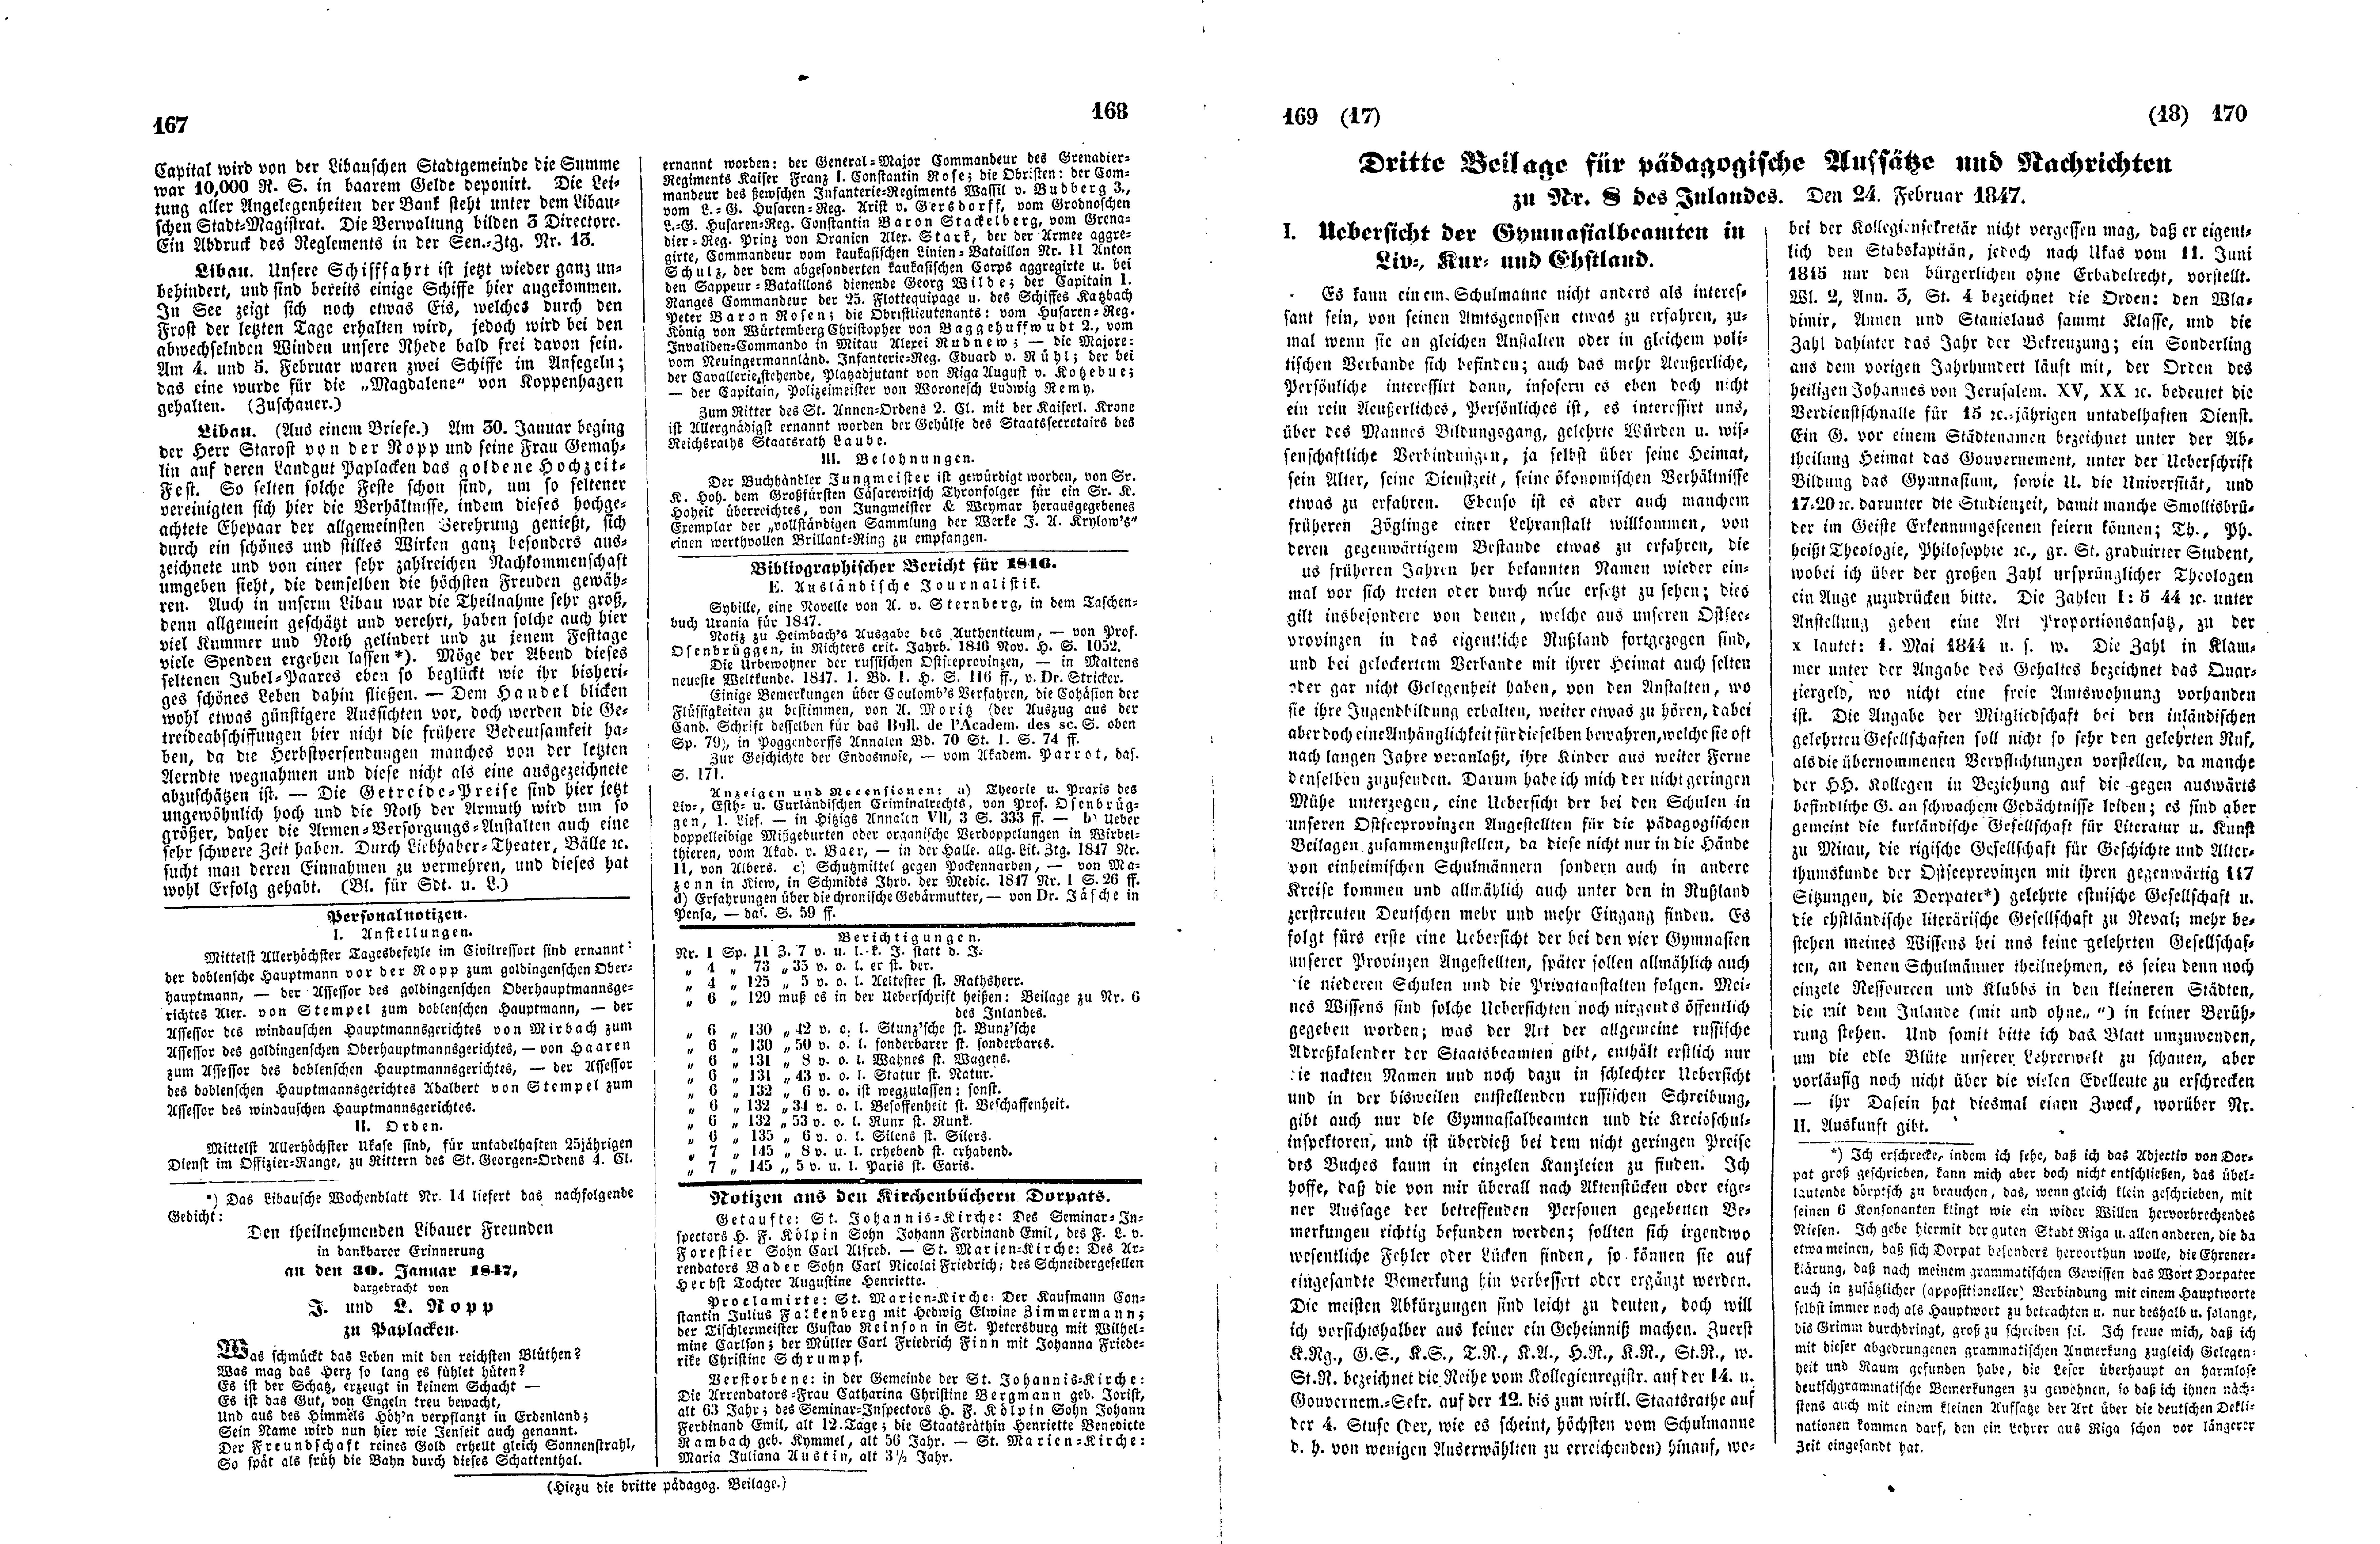 Das Inland [12] (1847) | 47. (167-170) Main body of text